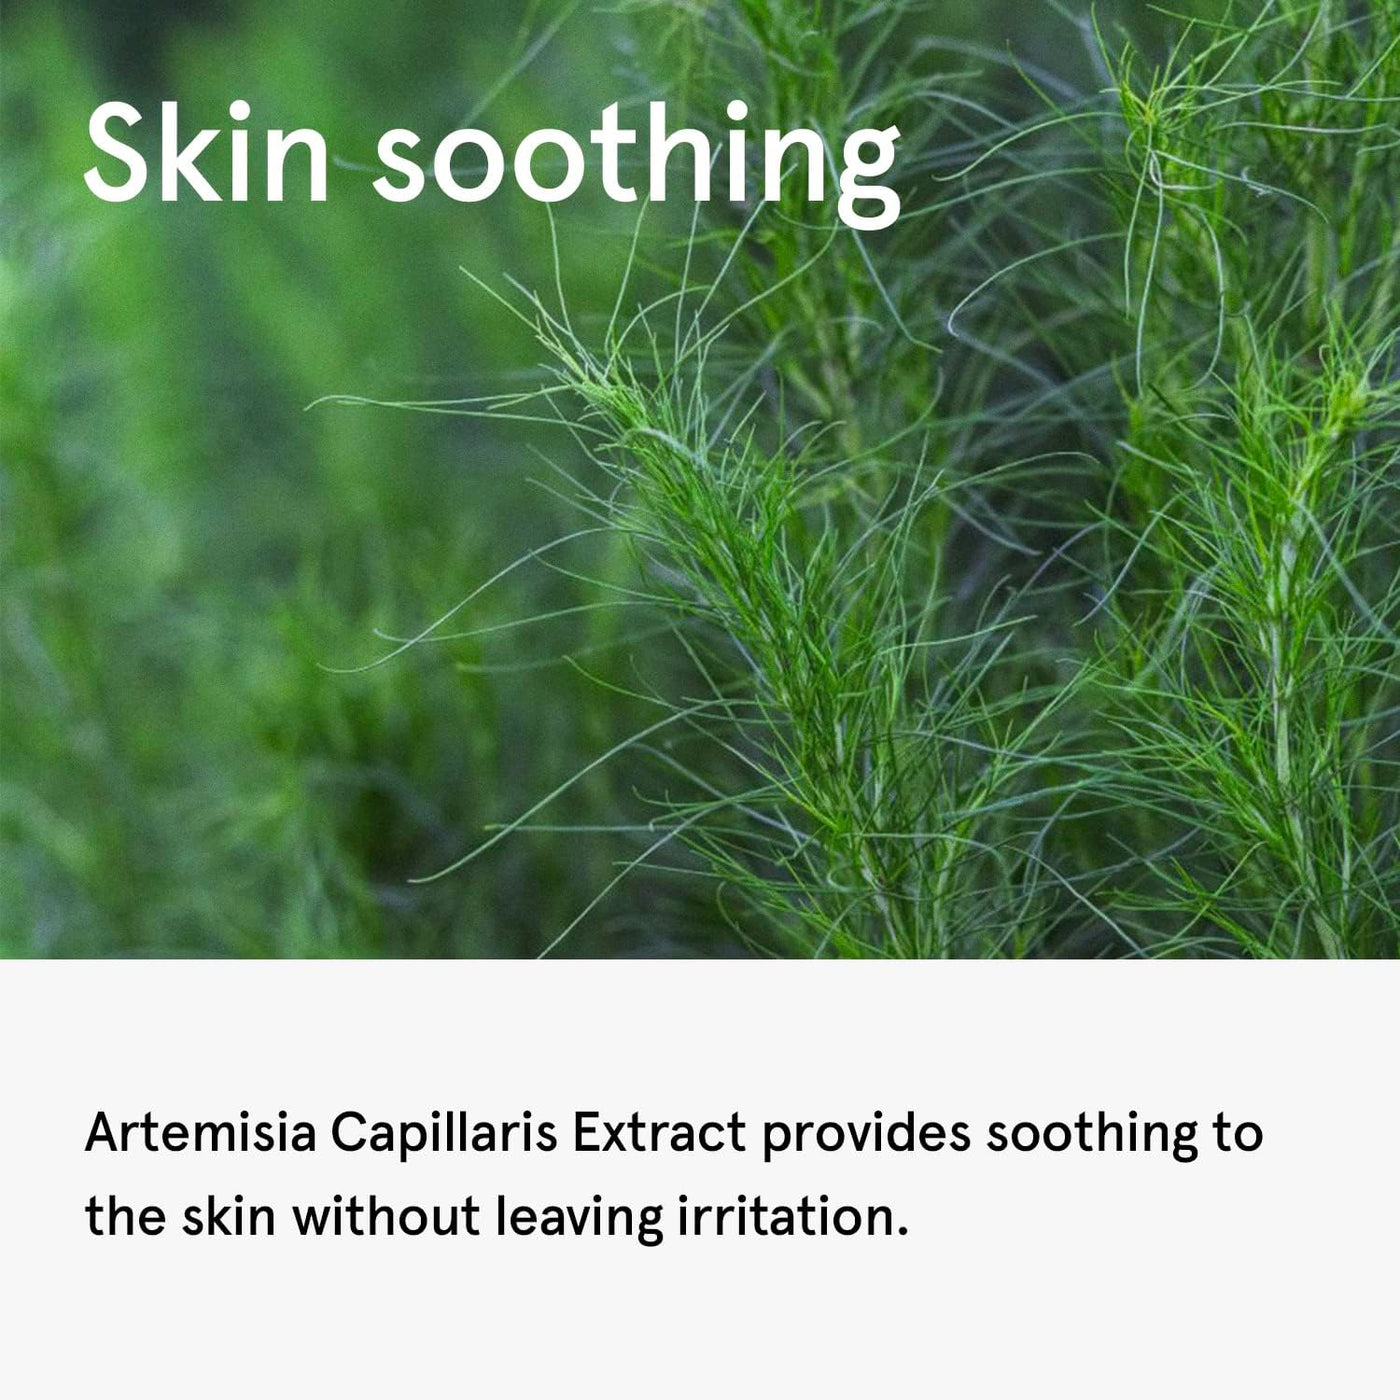 One Thing Artemisia Capillaris Extract